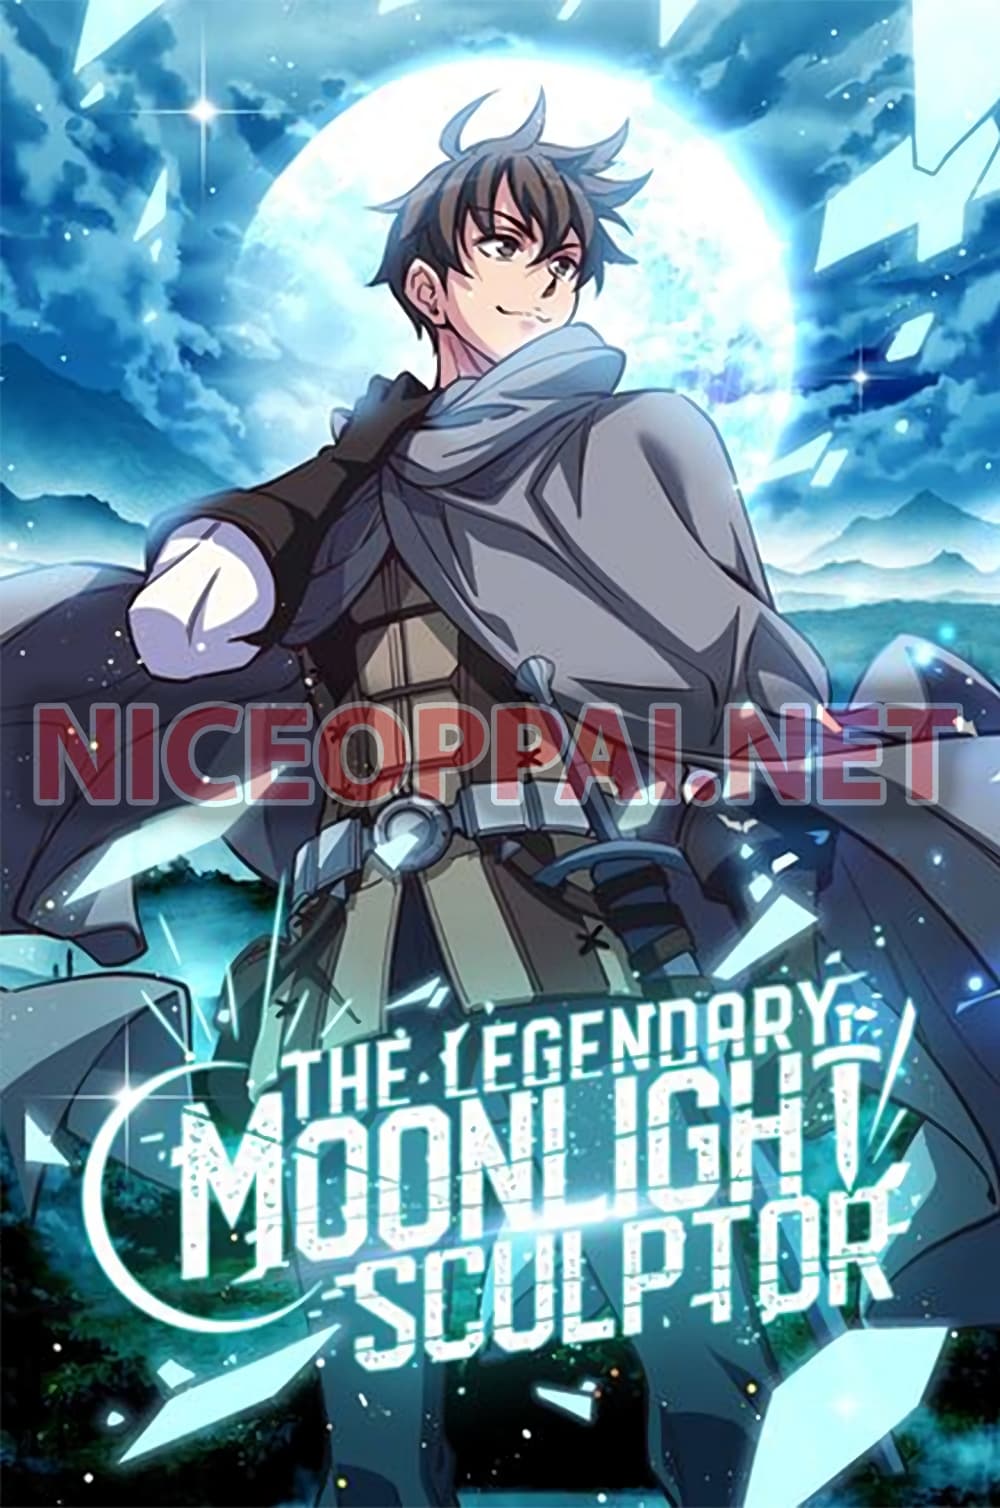 Legendary Moonlight Sculptor ประติมากรแสงจันทร์ในตำนาน 165-165